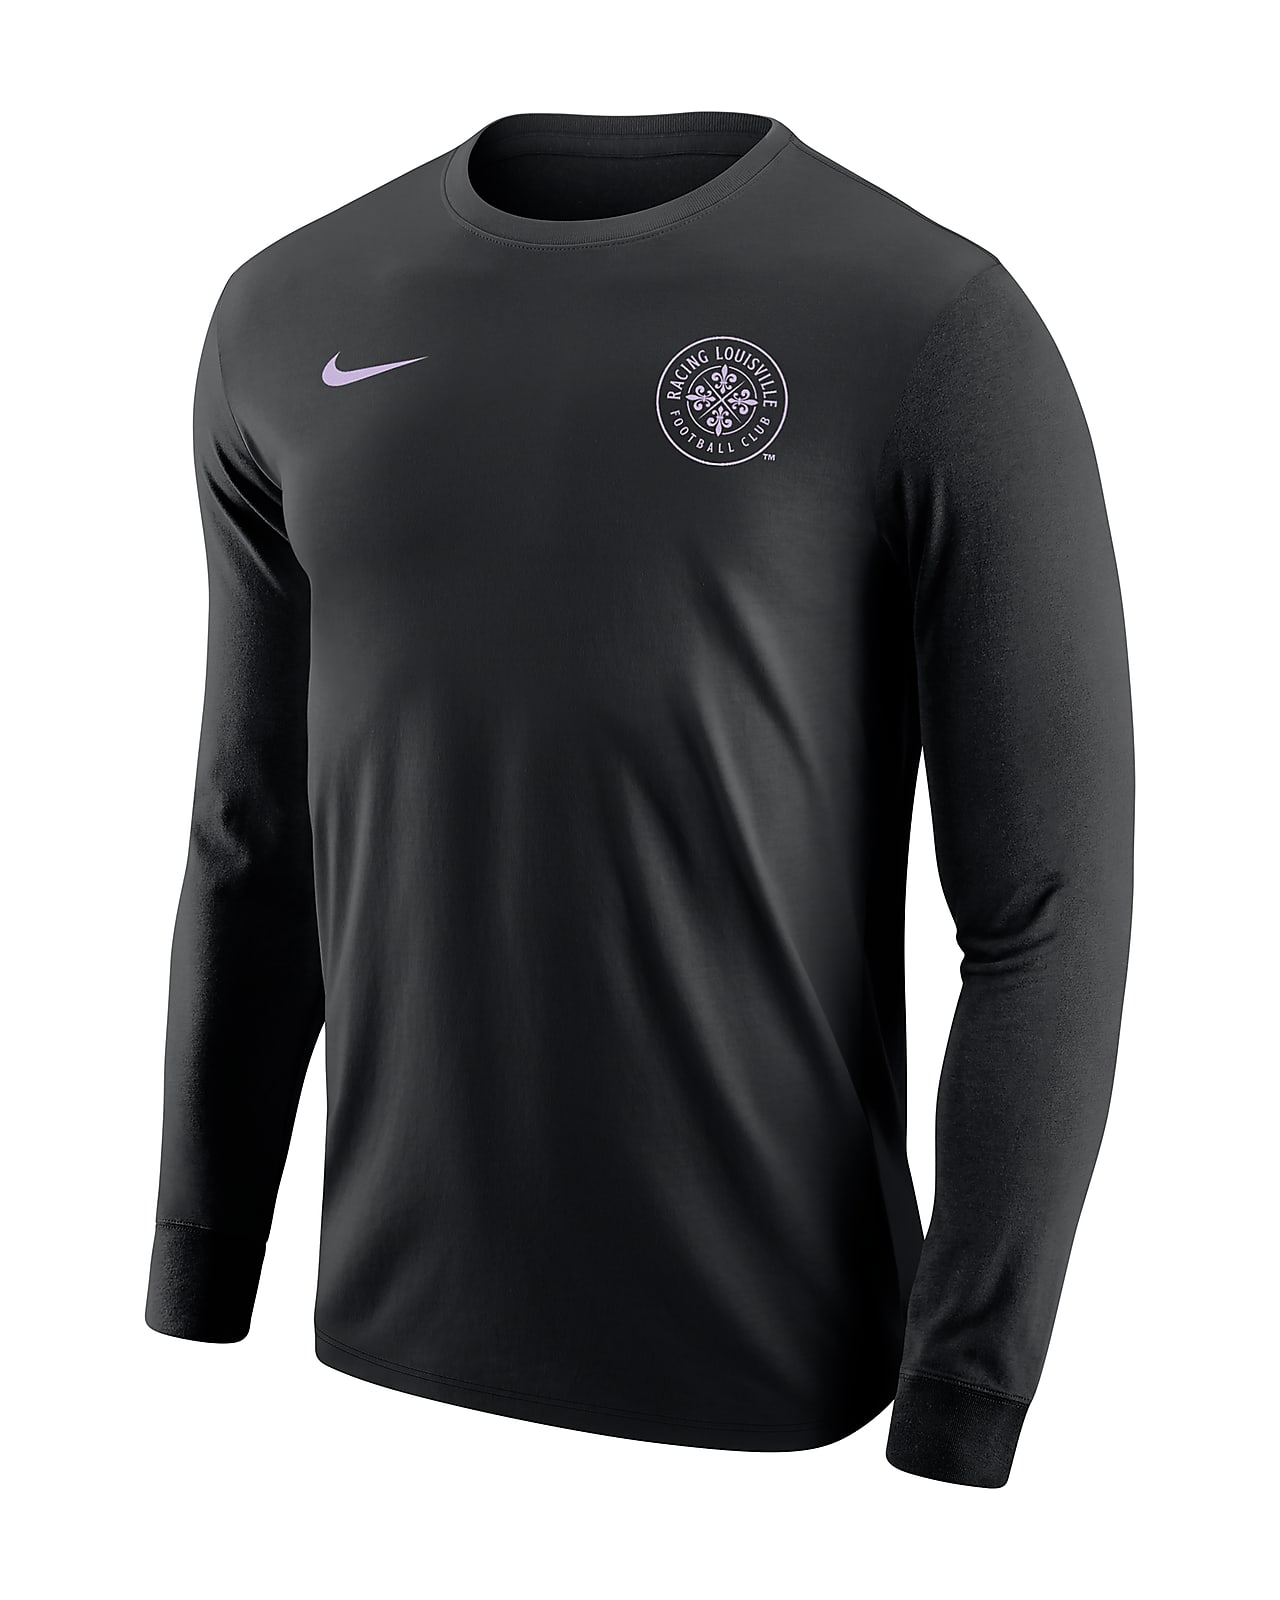 Racing Louisville Men's Nike Soccer Long-Sleeve T-Shirt